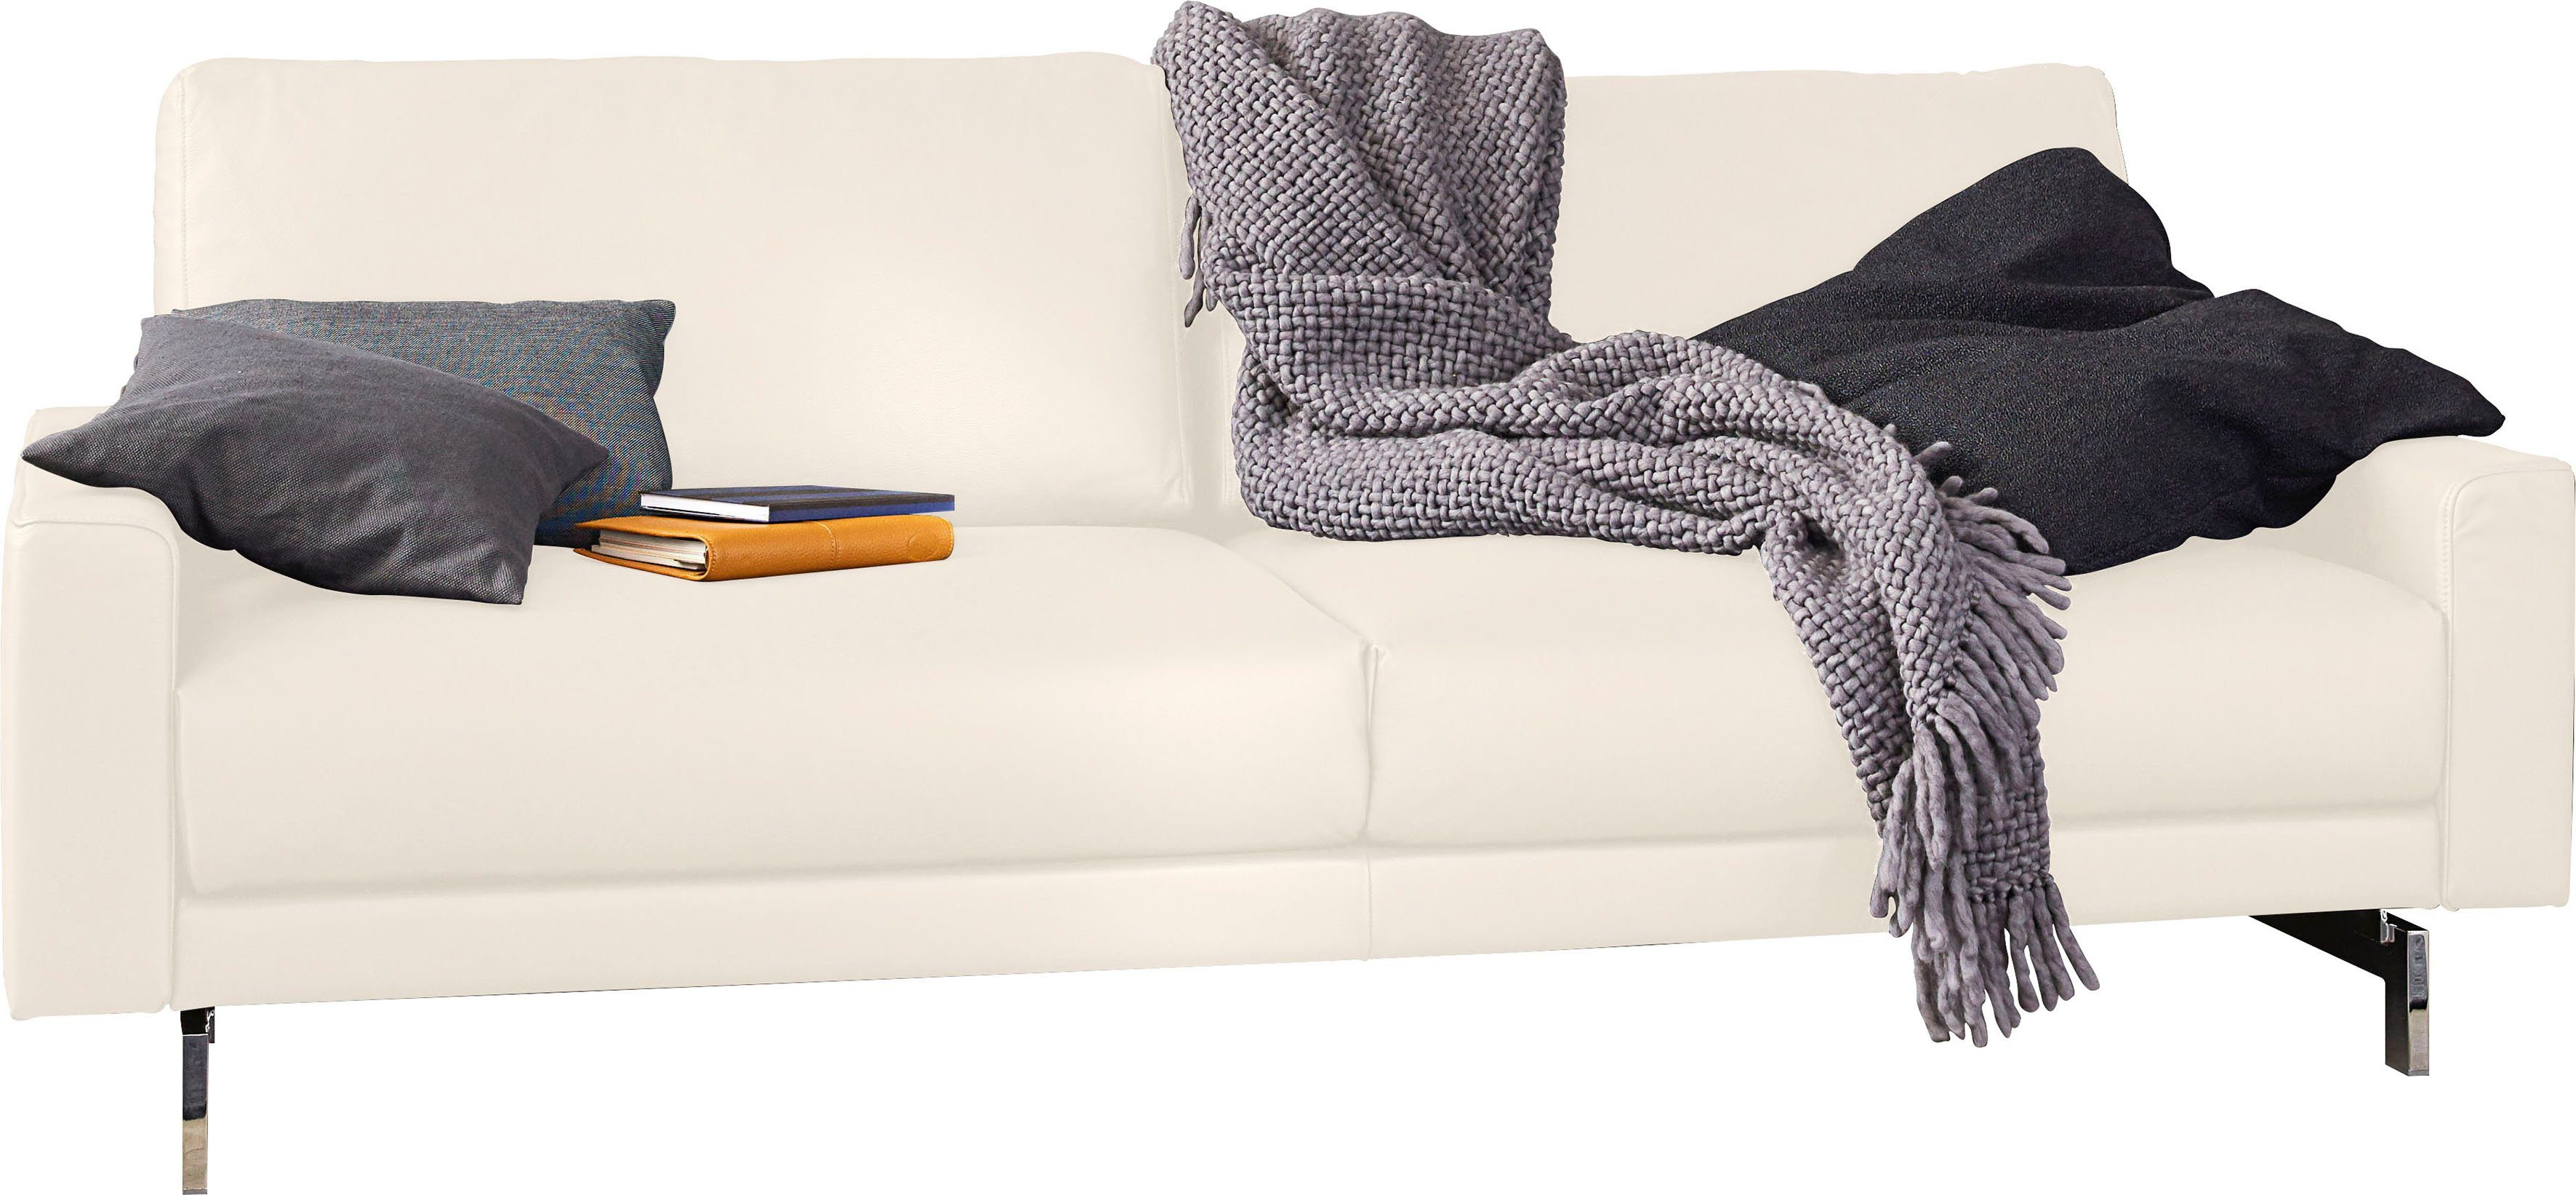 niedrig, hülsta Armlehne hs.450, cm chromfarben 2,5-Sitzer Breite sofa Fuß glänzend, 184